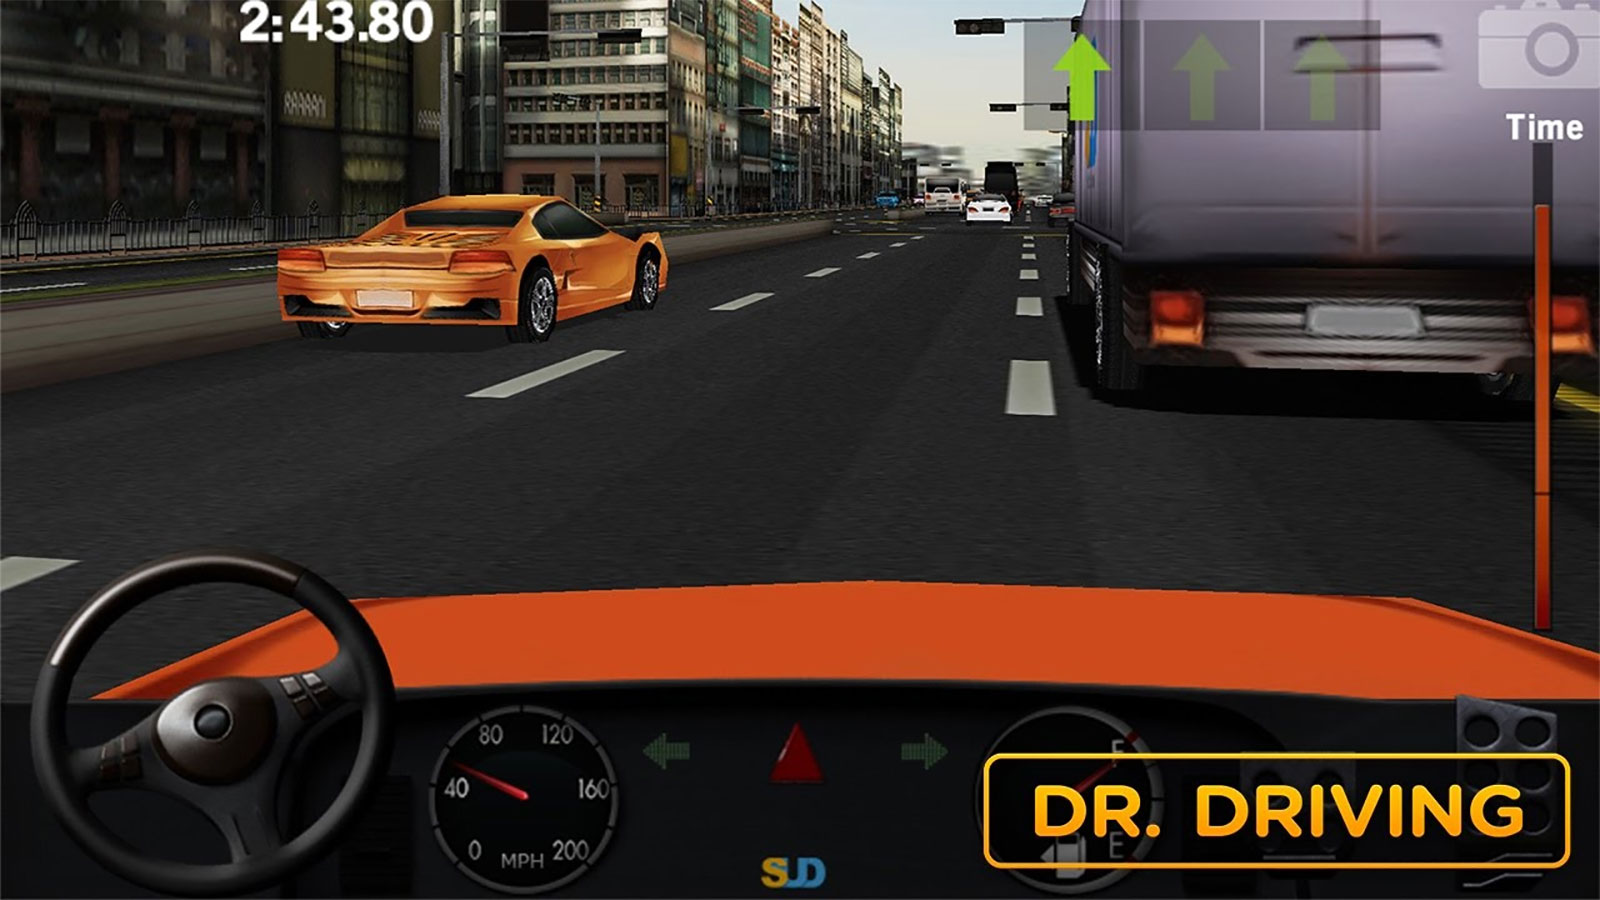 dr driving game download apk